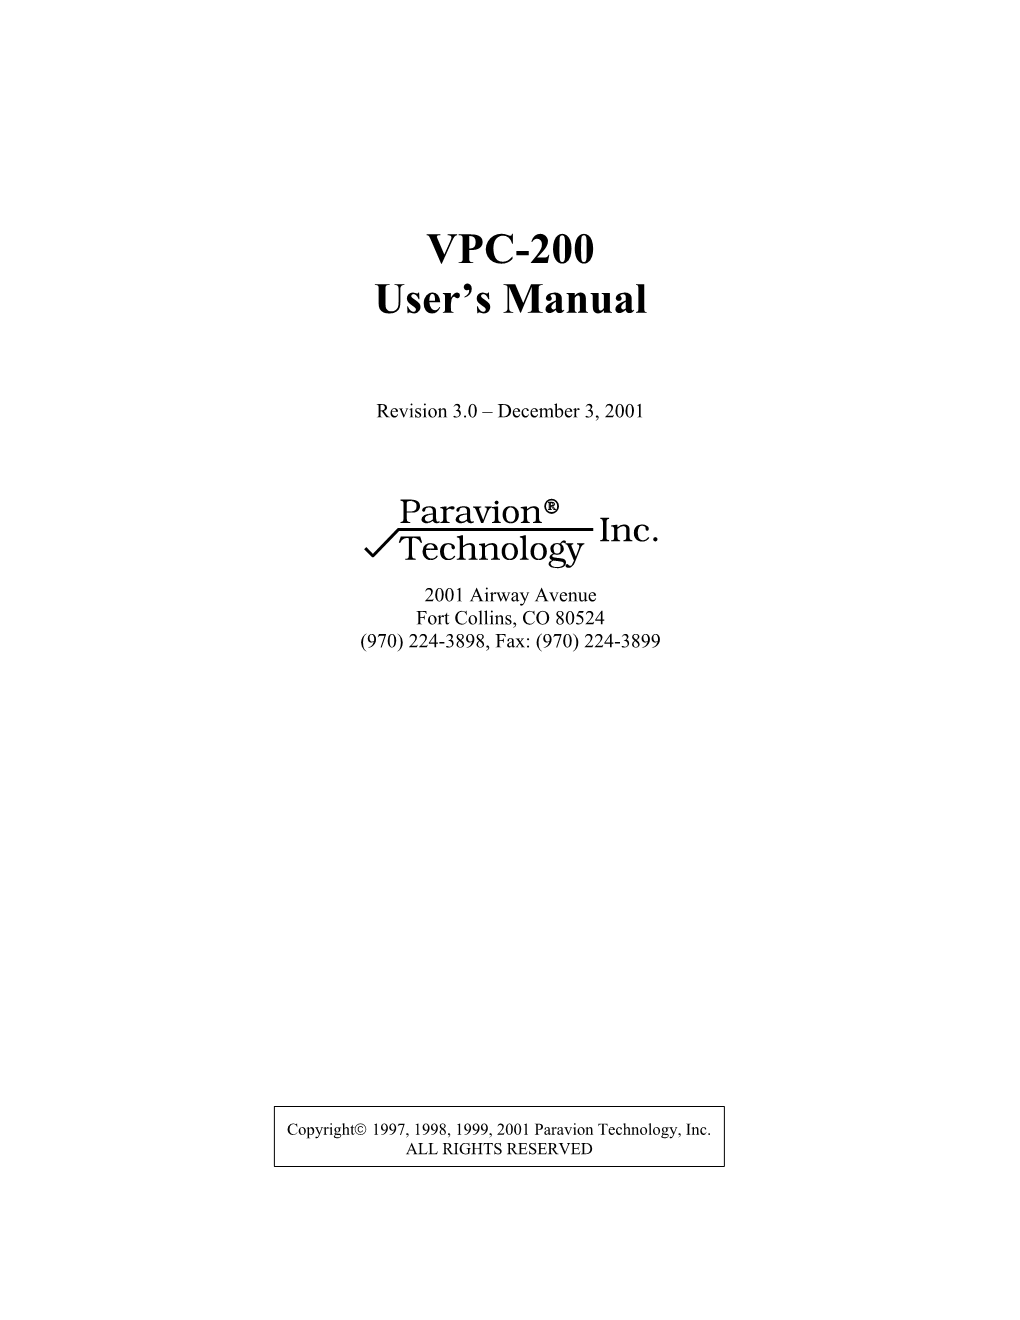 VPC-200 User's Manual